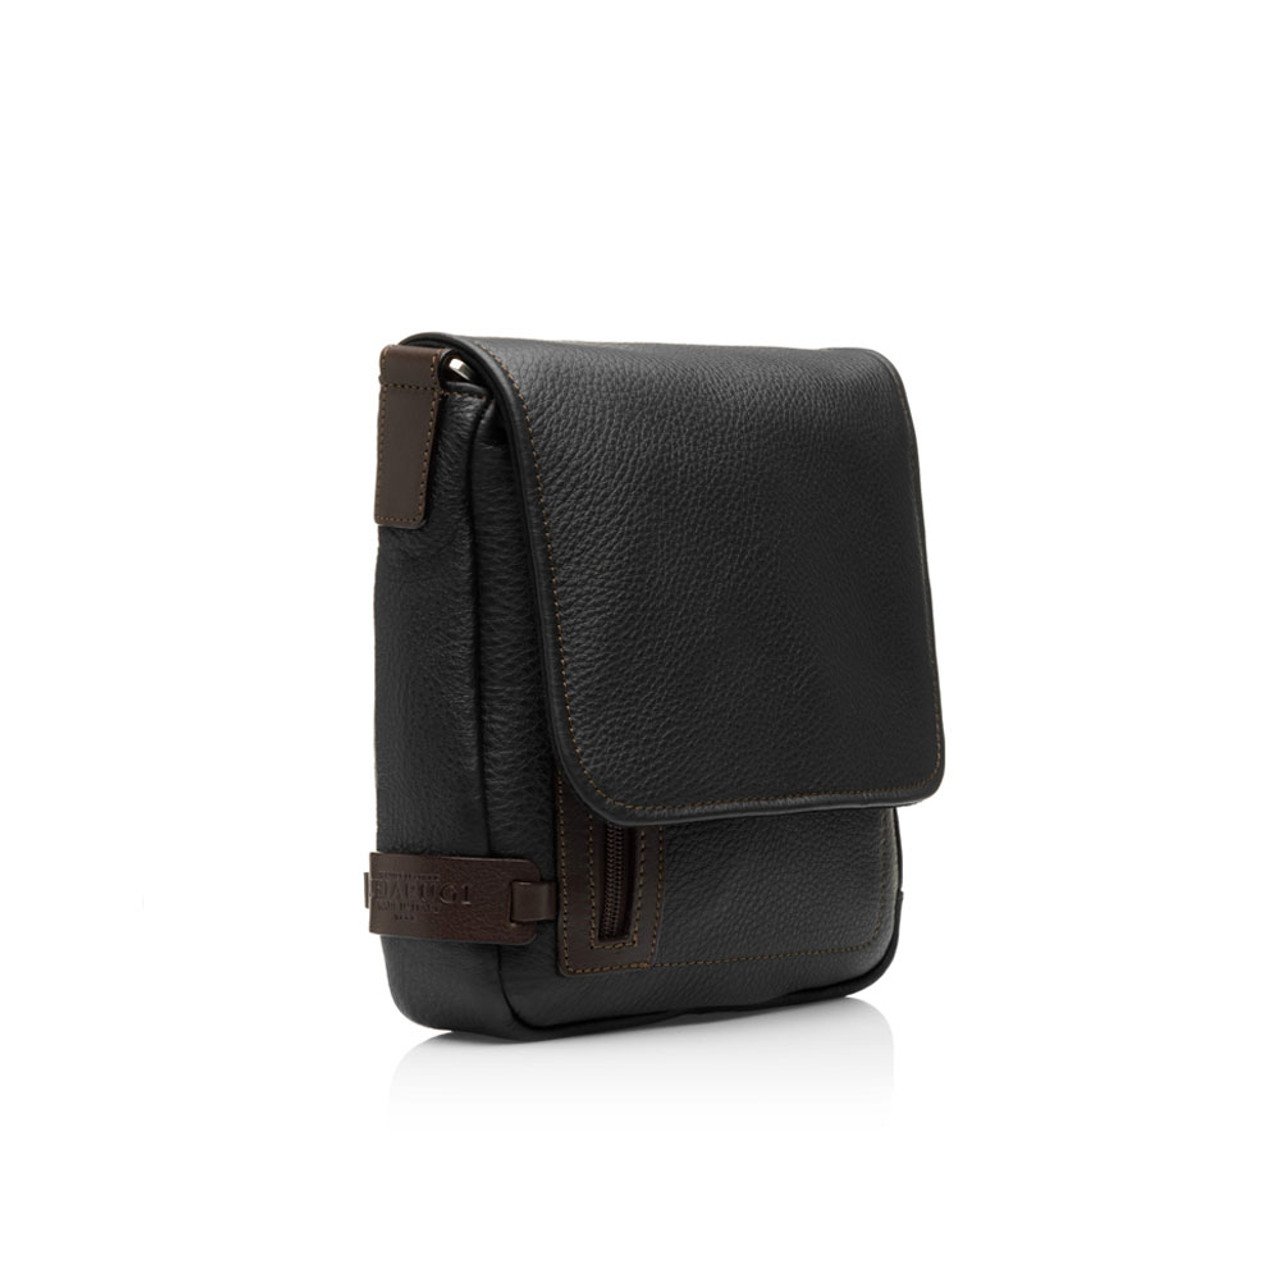 Shop METROCITY Unisex Street Style Leather Messenger & Shoulder Bags by  K-ARCHE